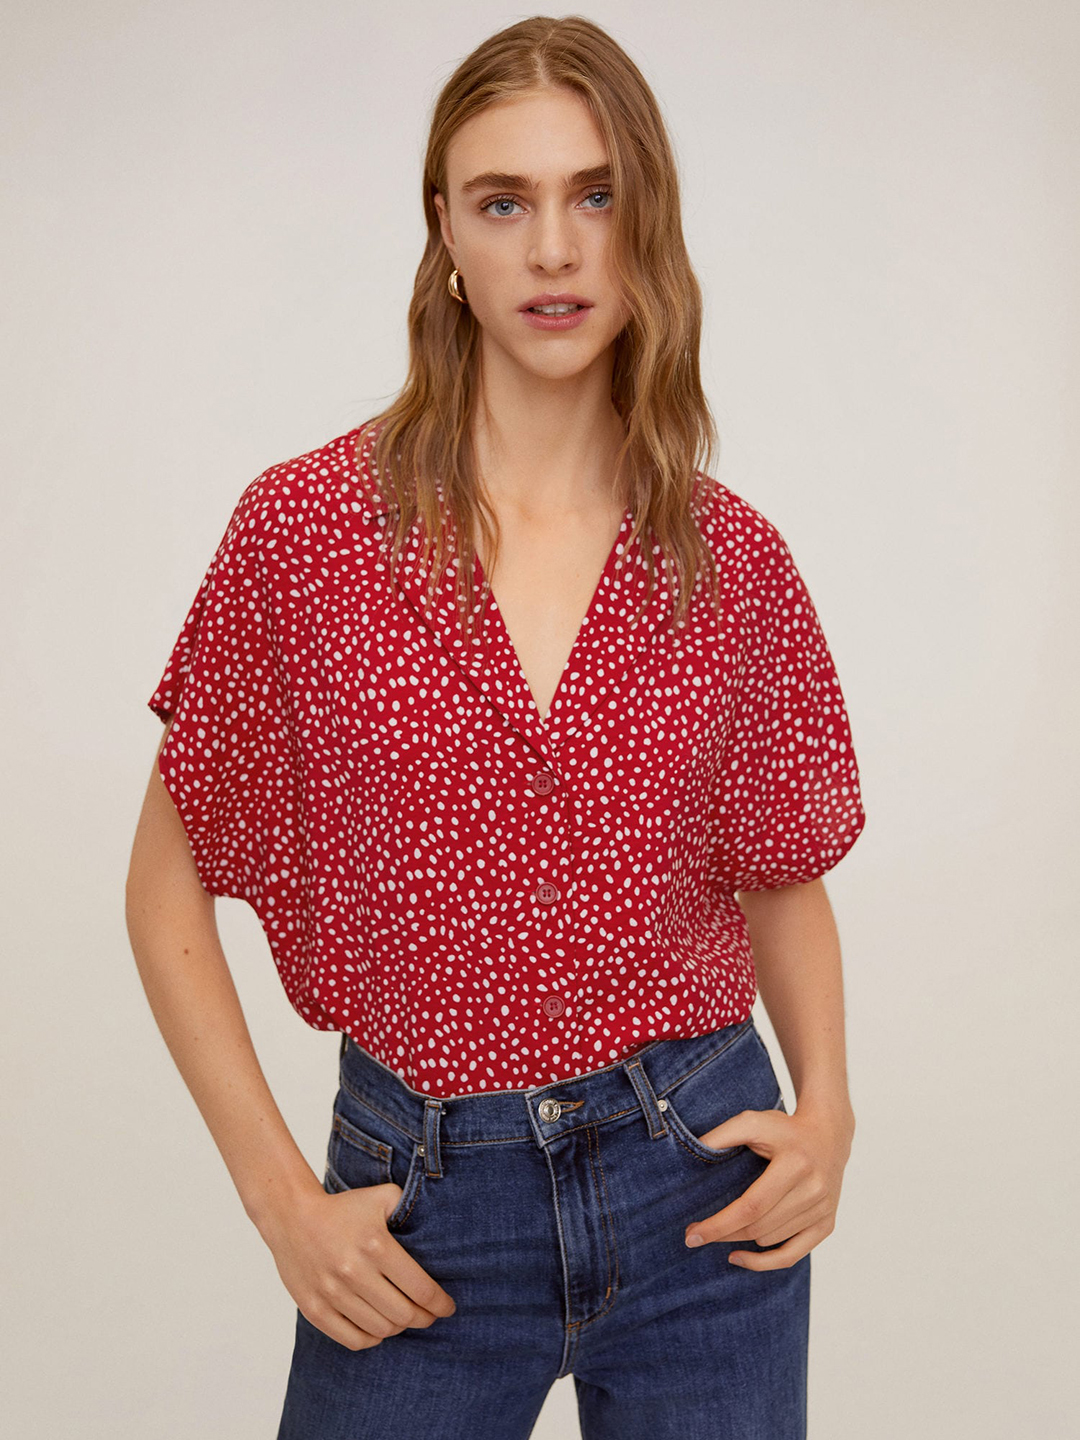 MANGO Women Red & White Printed Regular Fit Casual Shirt Price in India